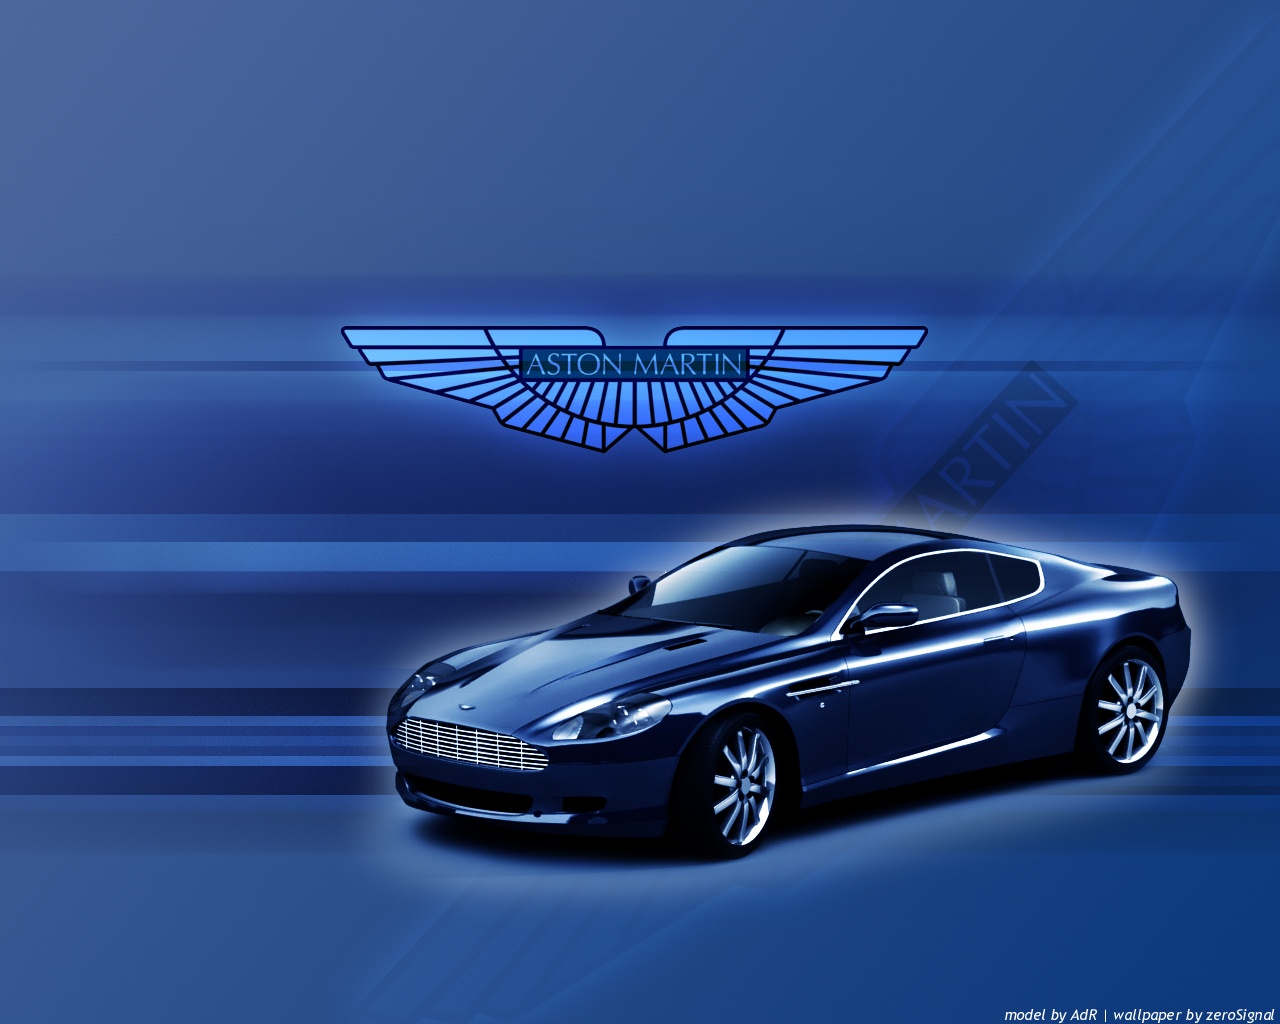 Beautiful Aston Martin Db9 Wallpaper HD Background As Much We Do